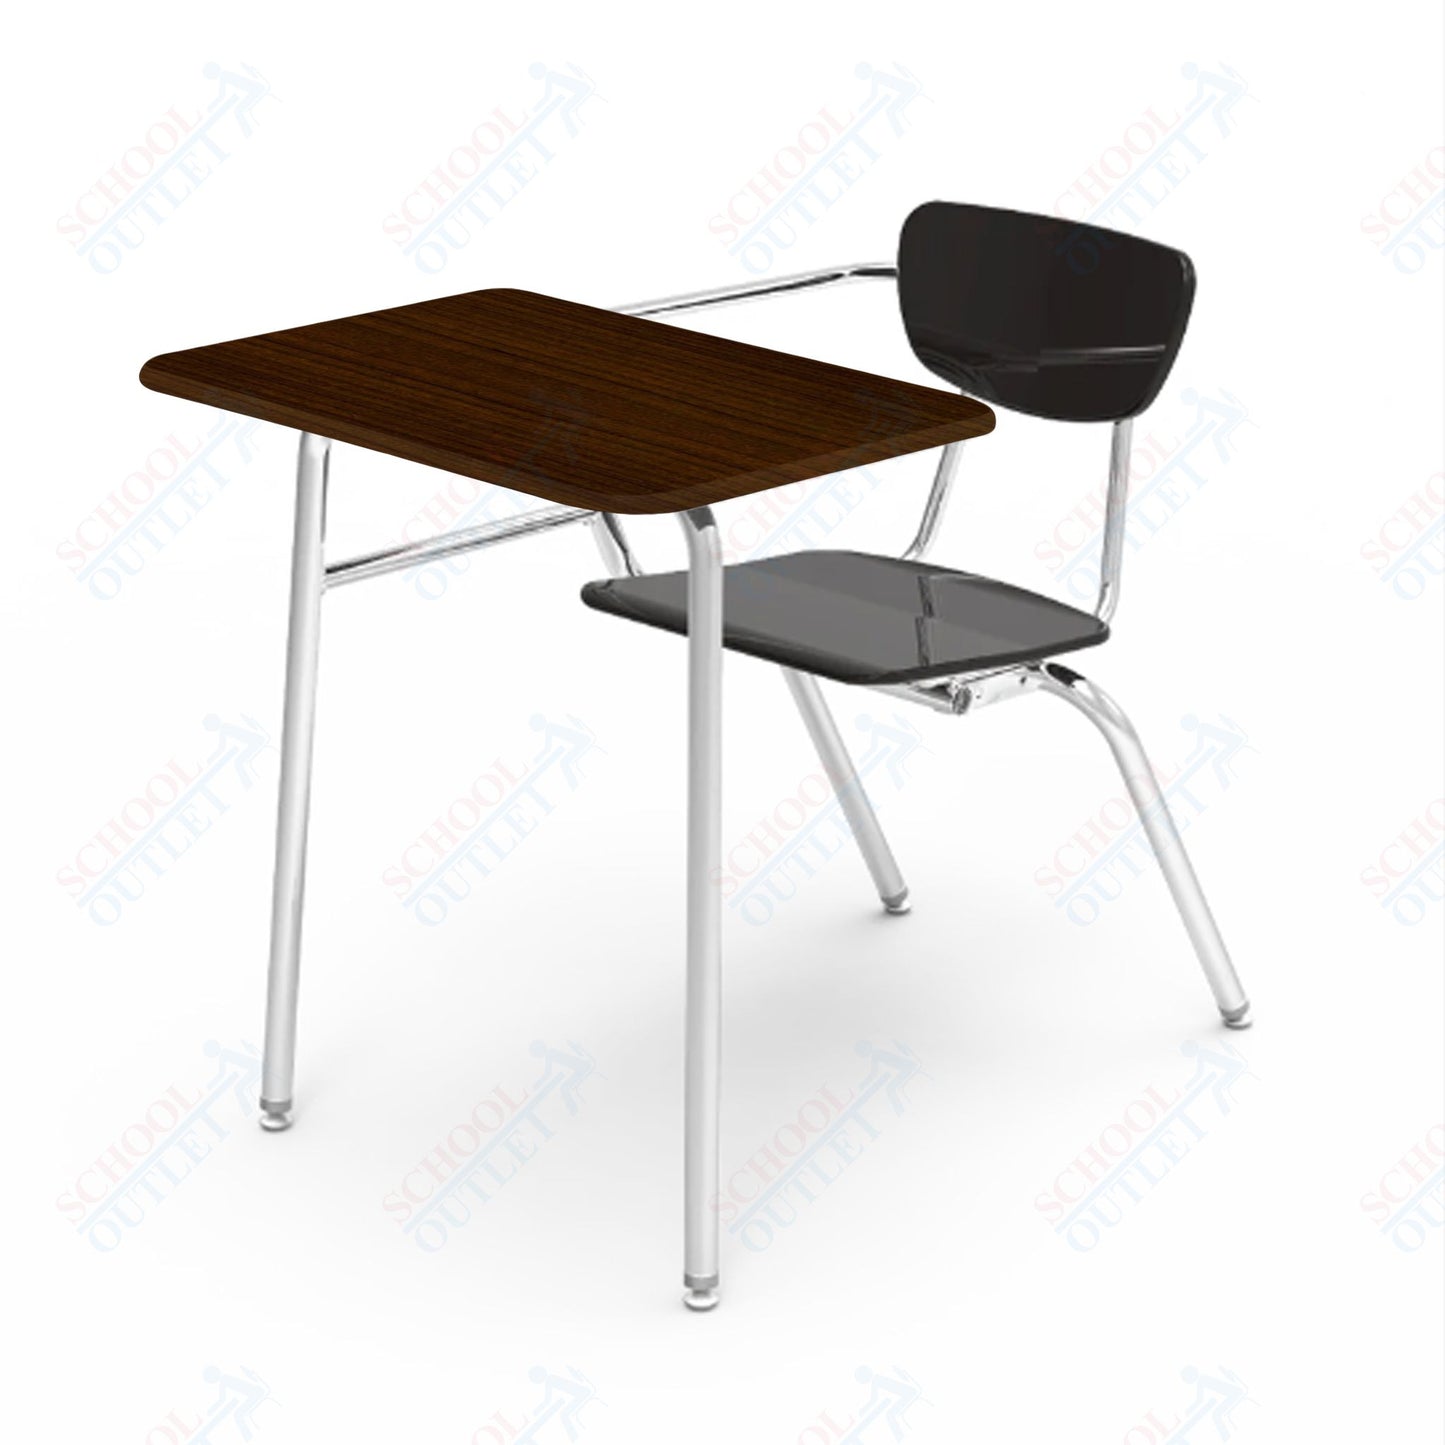 Virco 3400NBRL - Combo Desk with 18" Hard Plastic Seat, 18" x 24" Laminate Top, no bookrack (Virco 3400NBRL)